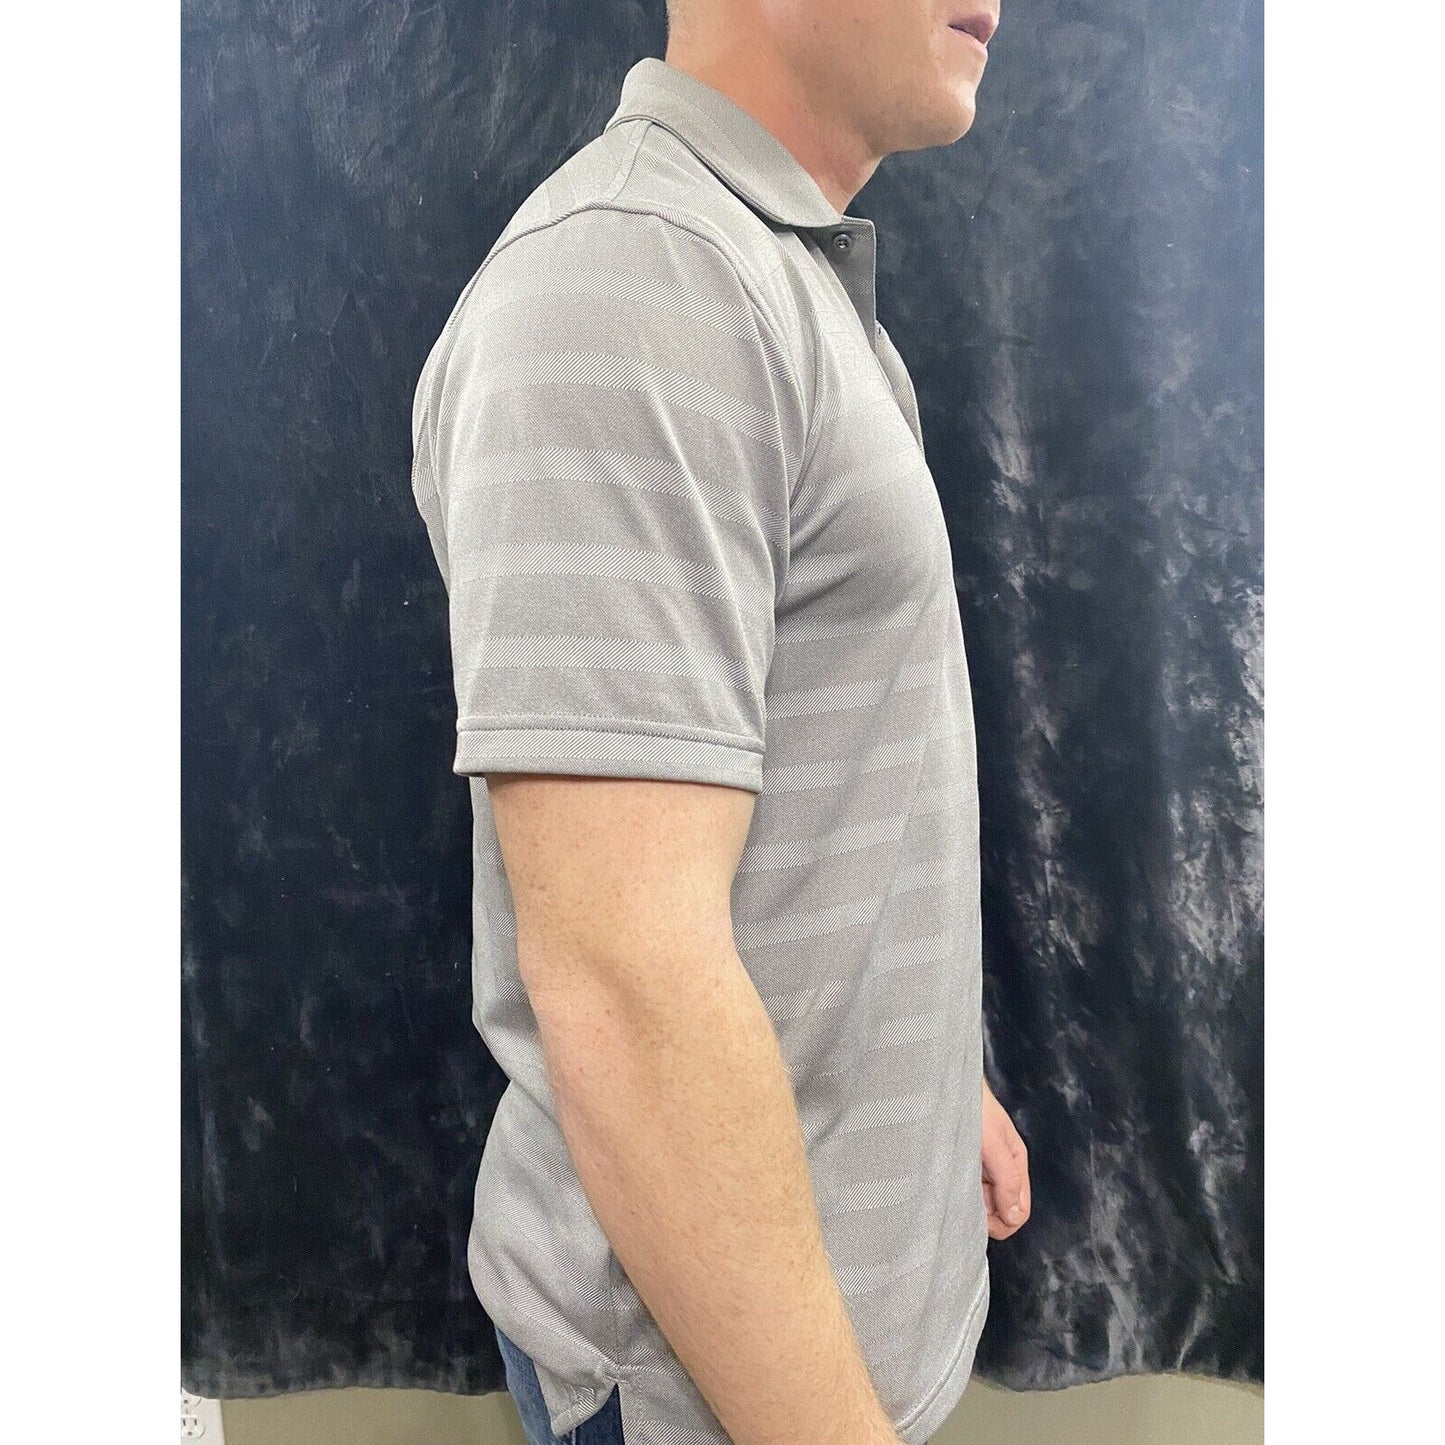 Bolle Men's Short Sleeve Performance Polo Shirt Tornado Stripes Gray Size Medium